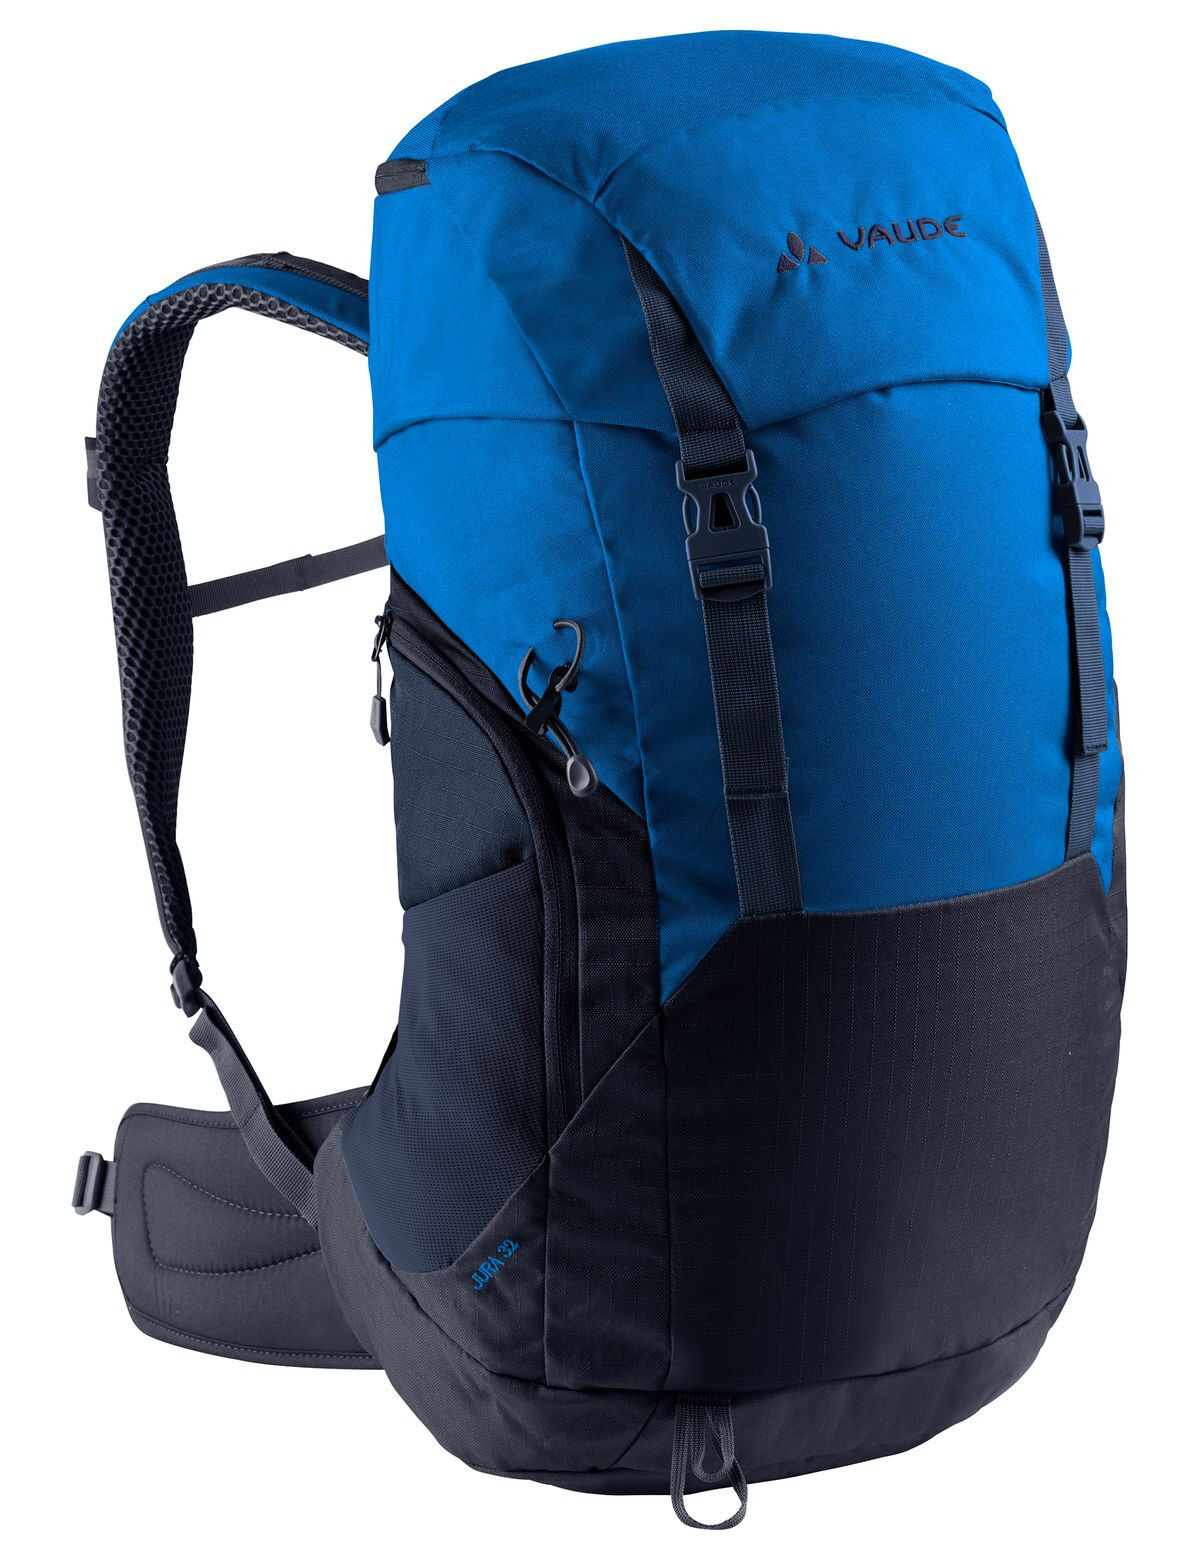 Vaude Jura 32 - Hiking backpack